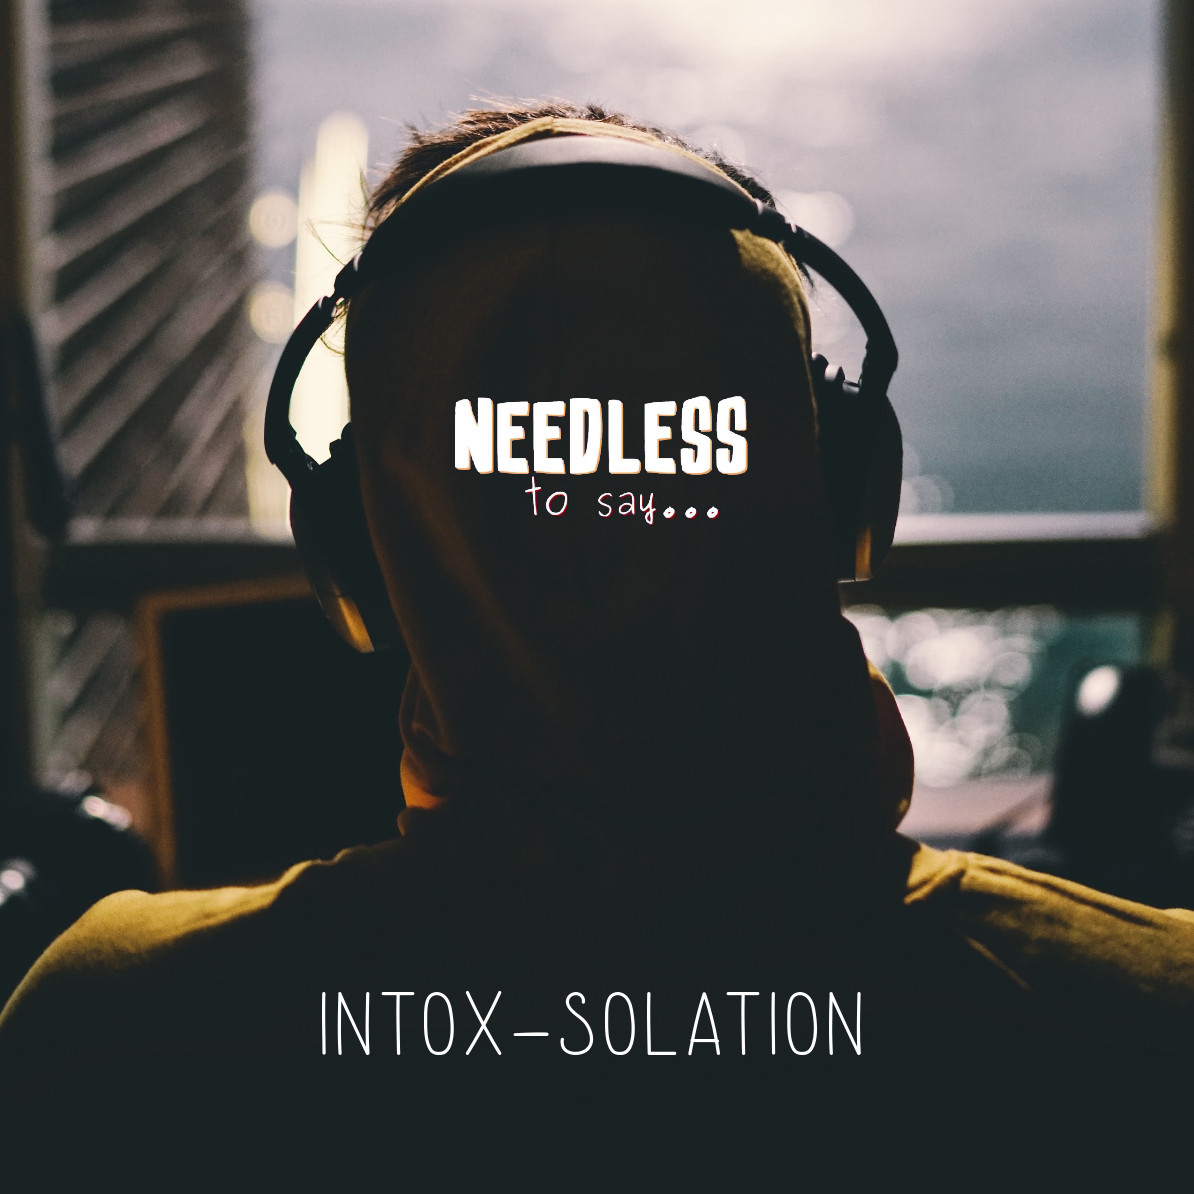 Intox-solation Image